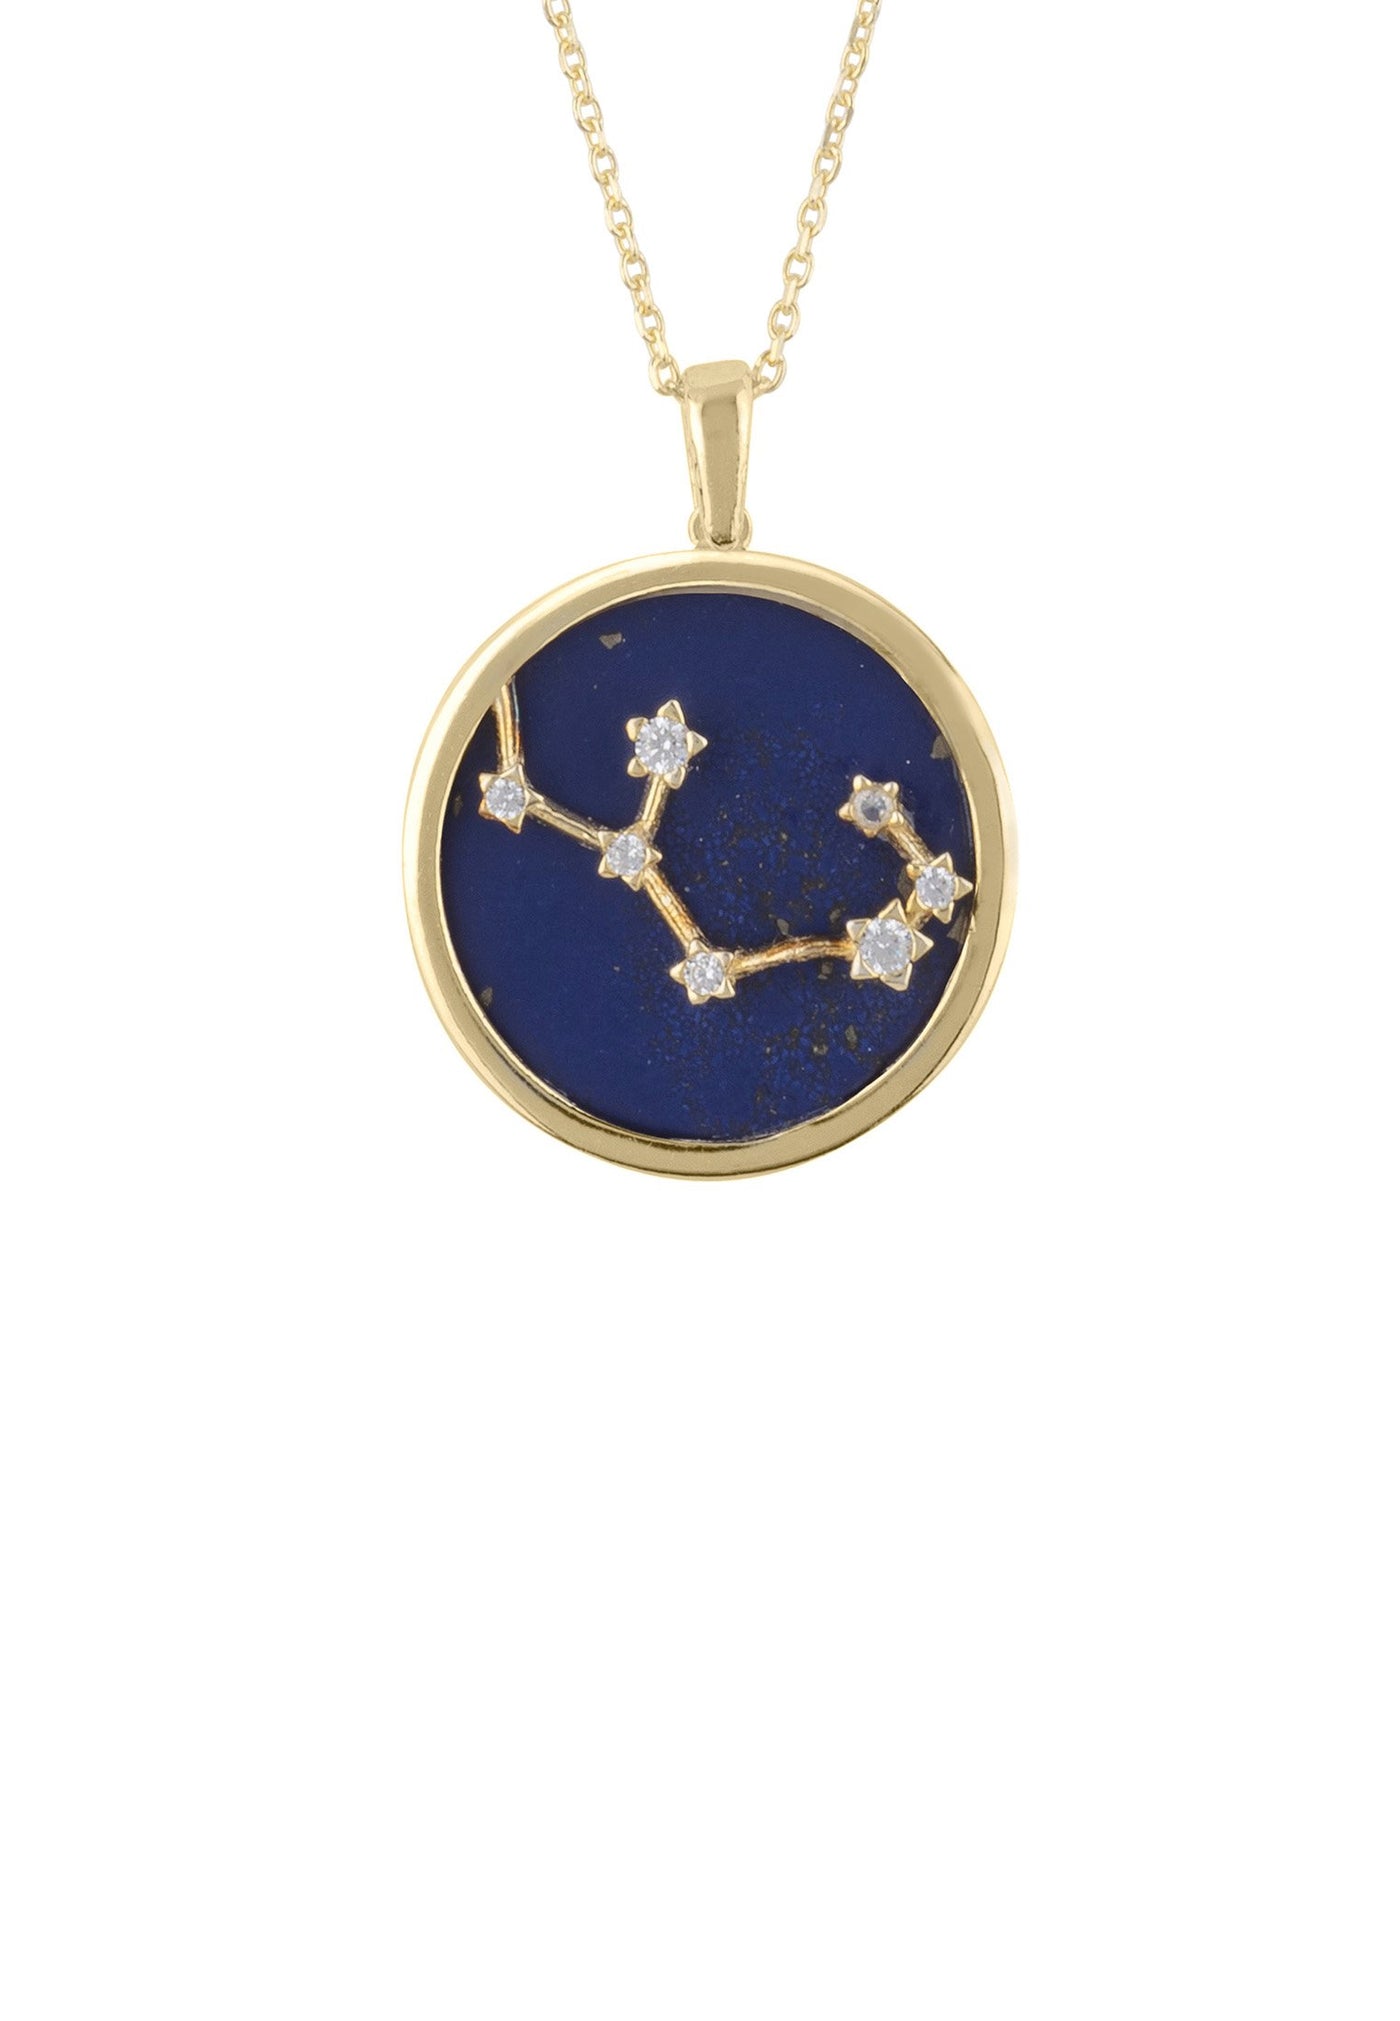 Sagittarius - Necklace - 22 carat gold plated - lapis lazuli with white zirconia